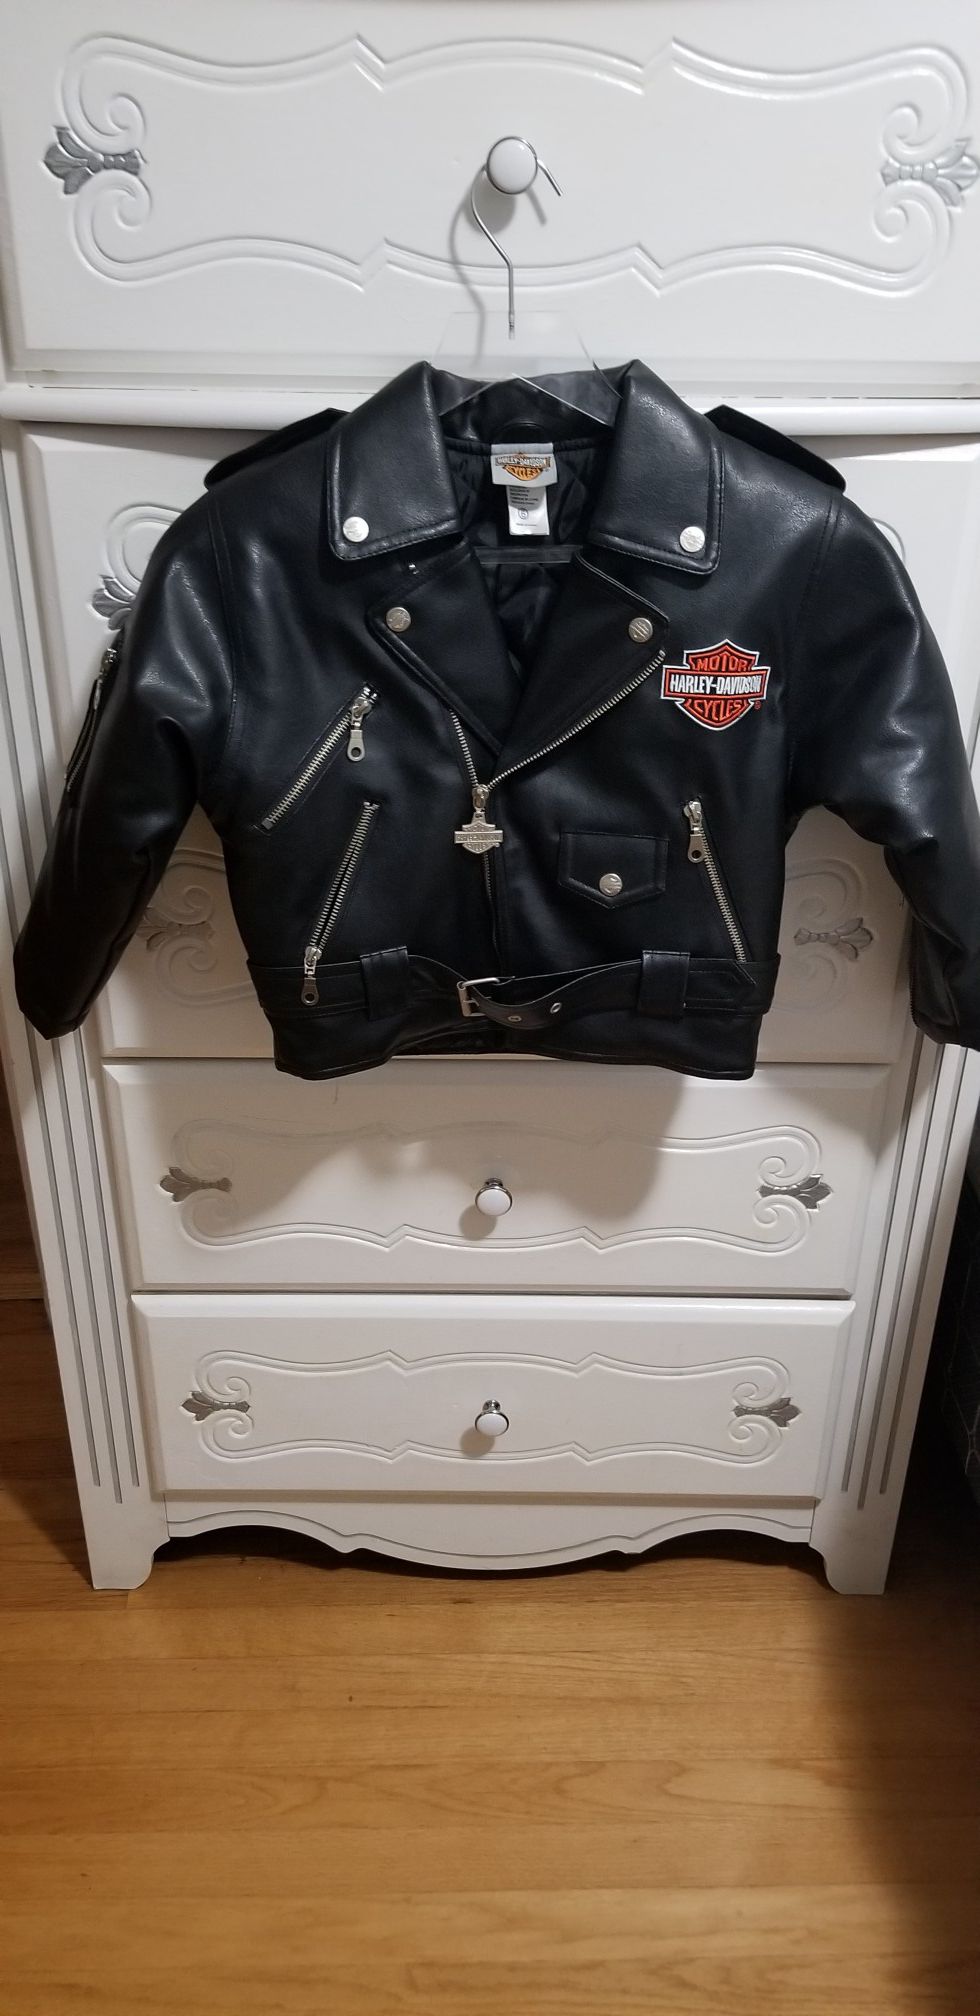 Harley- Davidson kids jacket